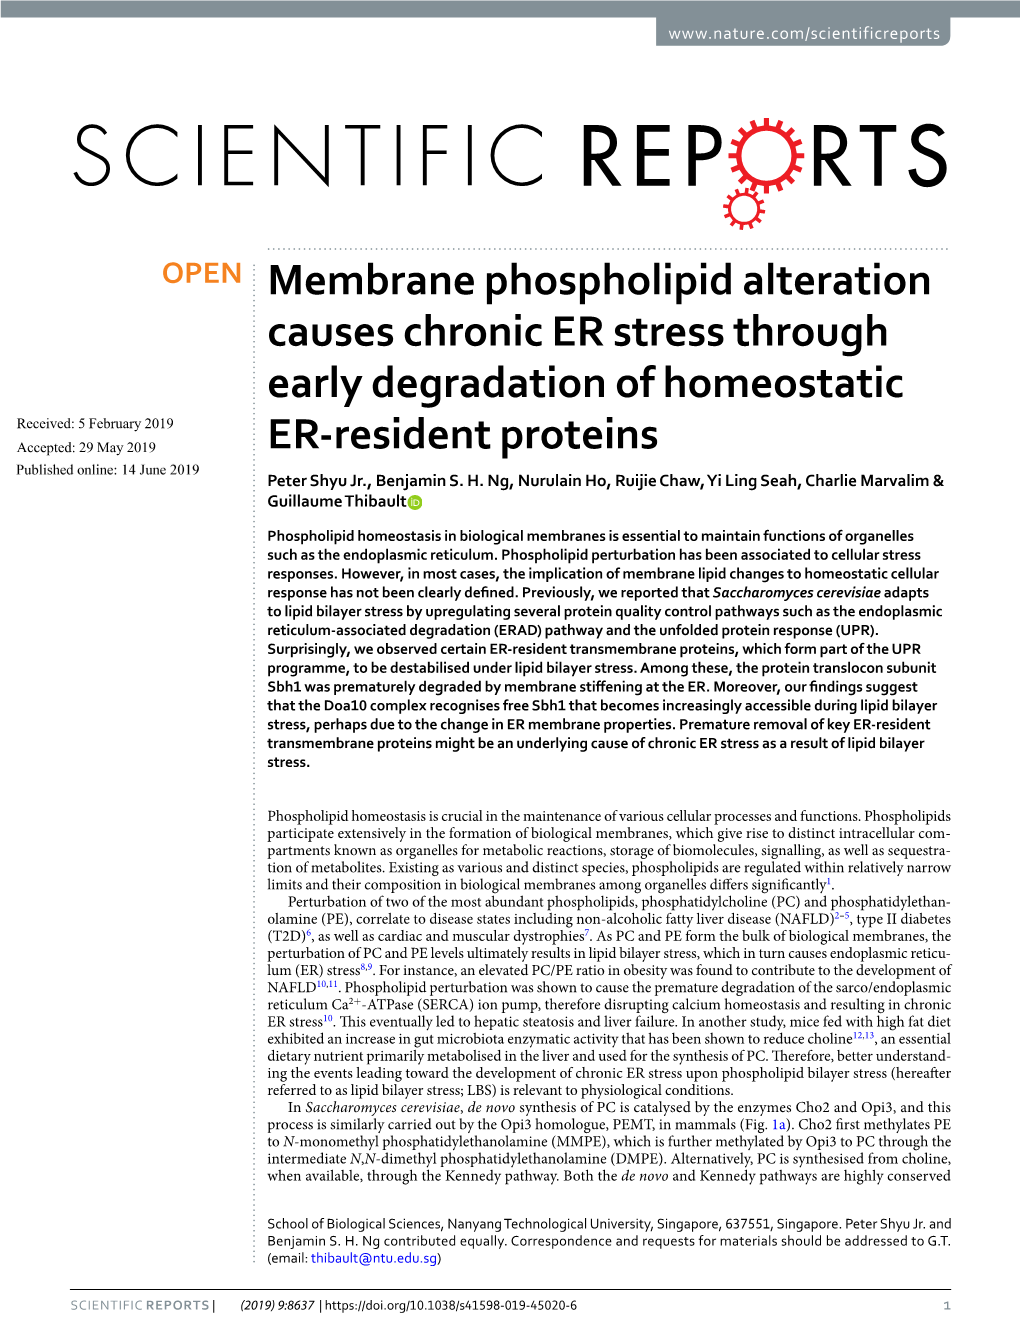 Membrane Phospholipid Alteration Causes Chronic ER Stress Through